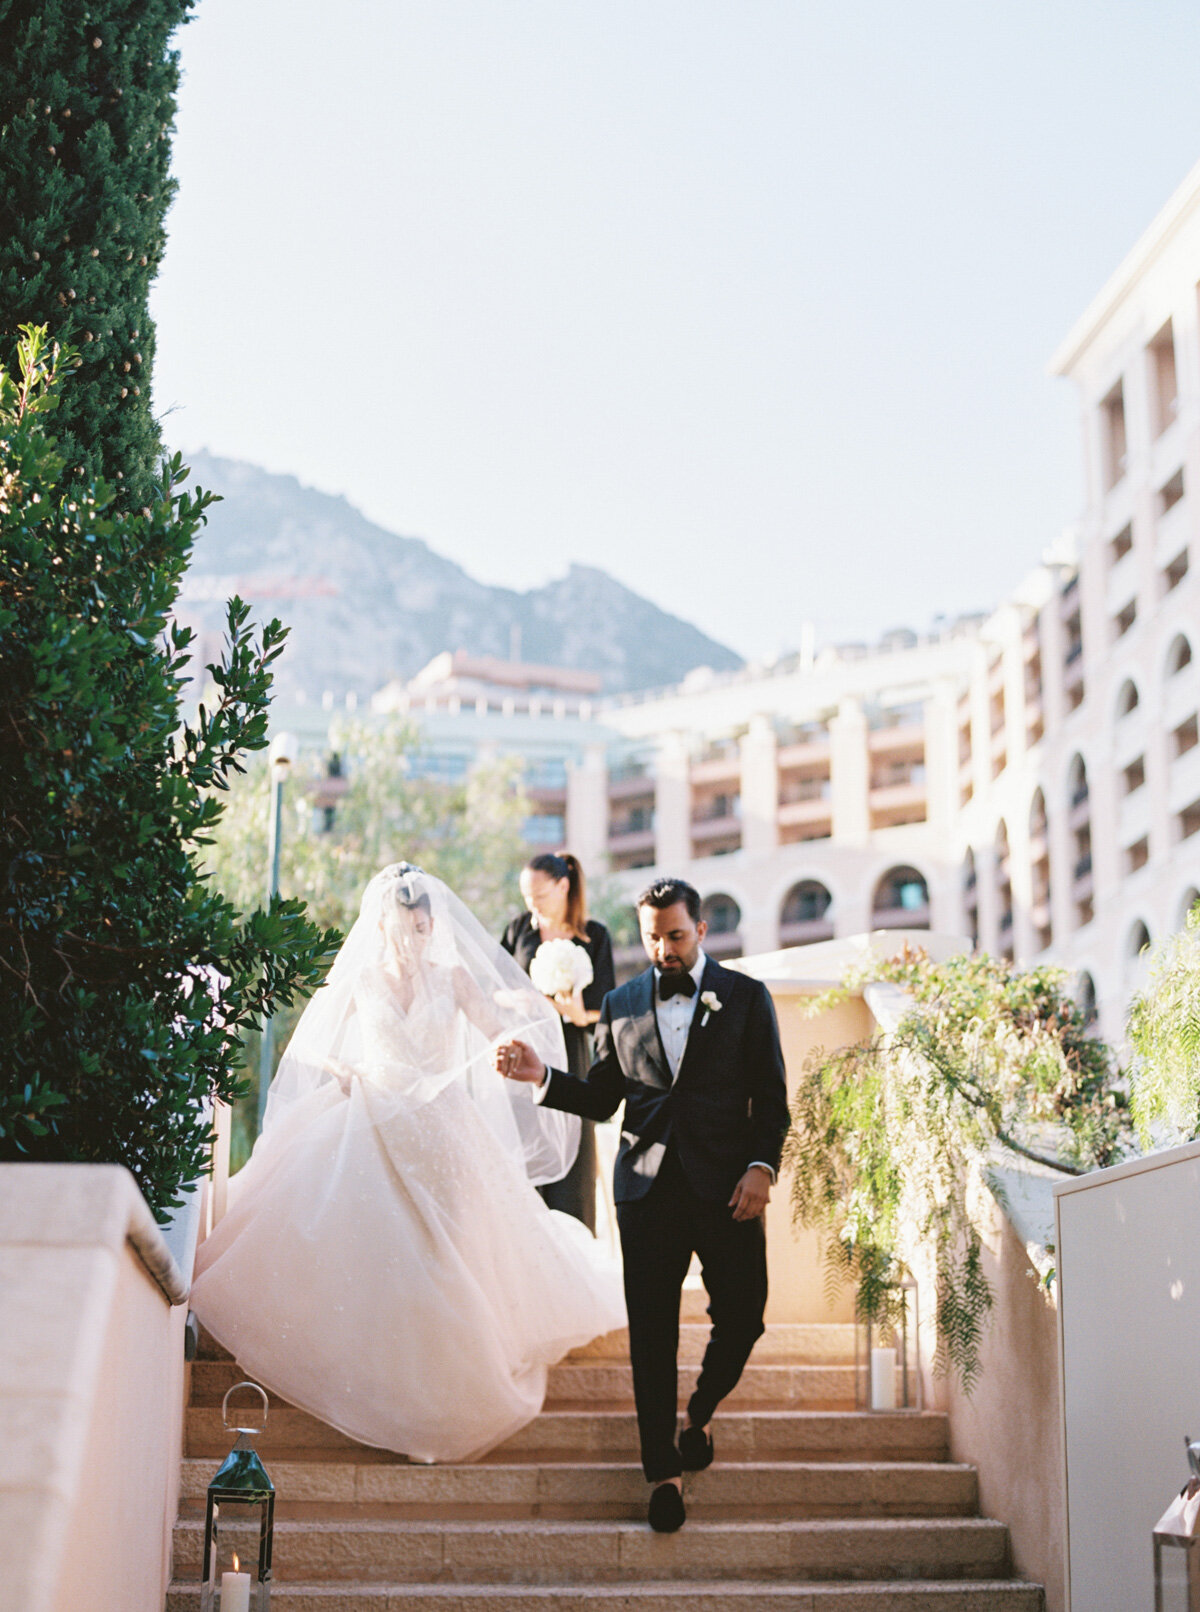 Monaco-Nice-Saint Tropez-Wedding-Elie-Saab-Katie-Grant-destination-wedding (61 of 112).jpg